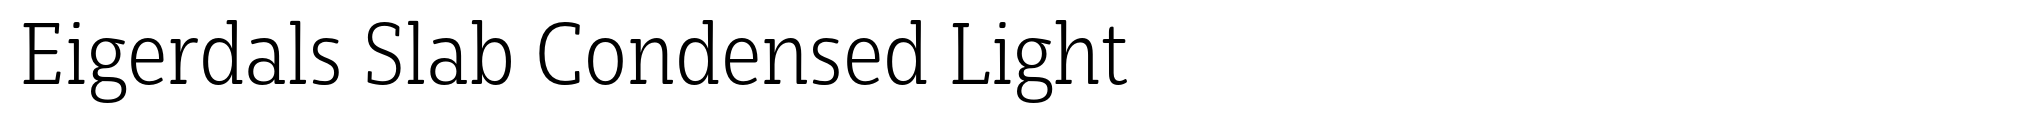 Eigerdals Slab Condensed Light image